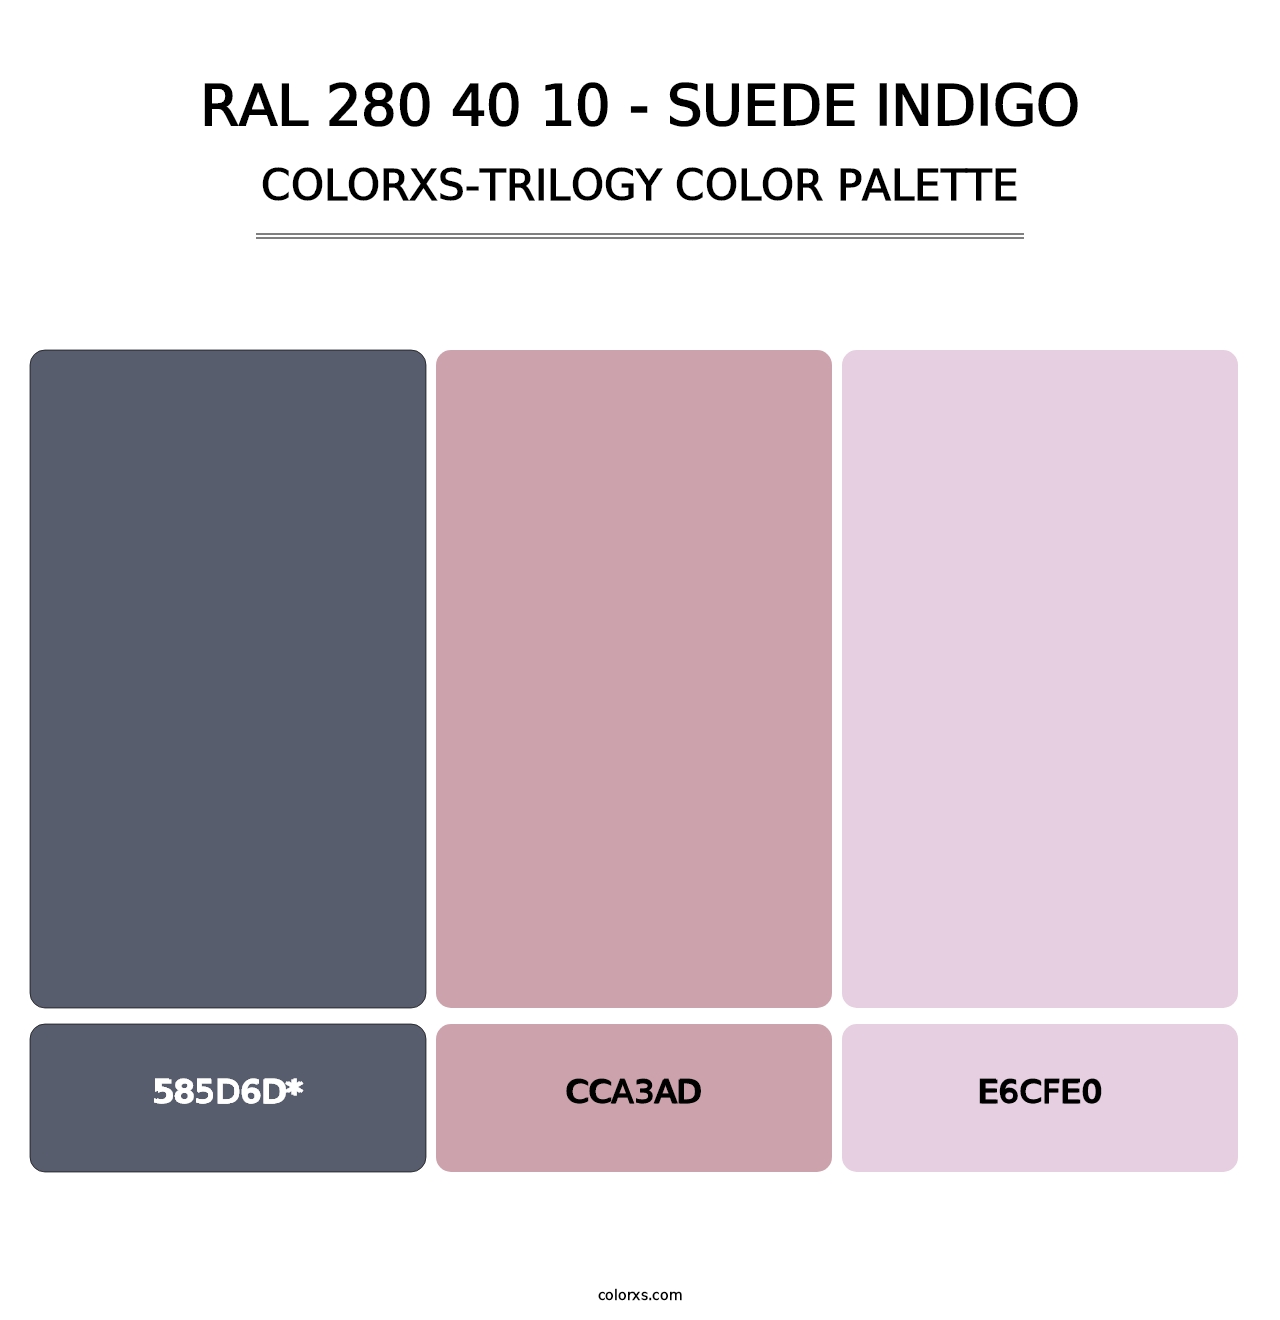 RAL 280 40 10 - Suede Indigo - Colorxs Trilogy Palette